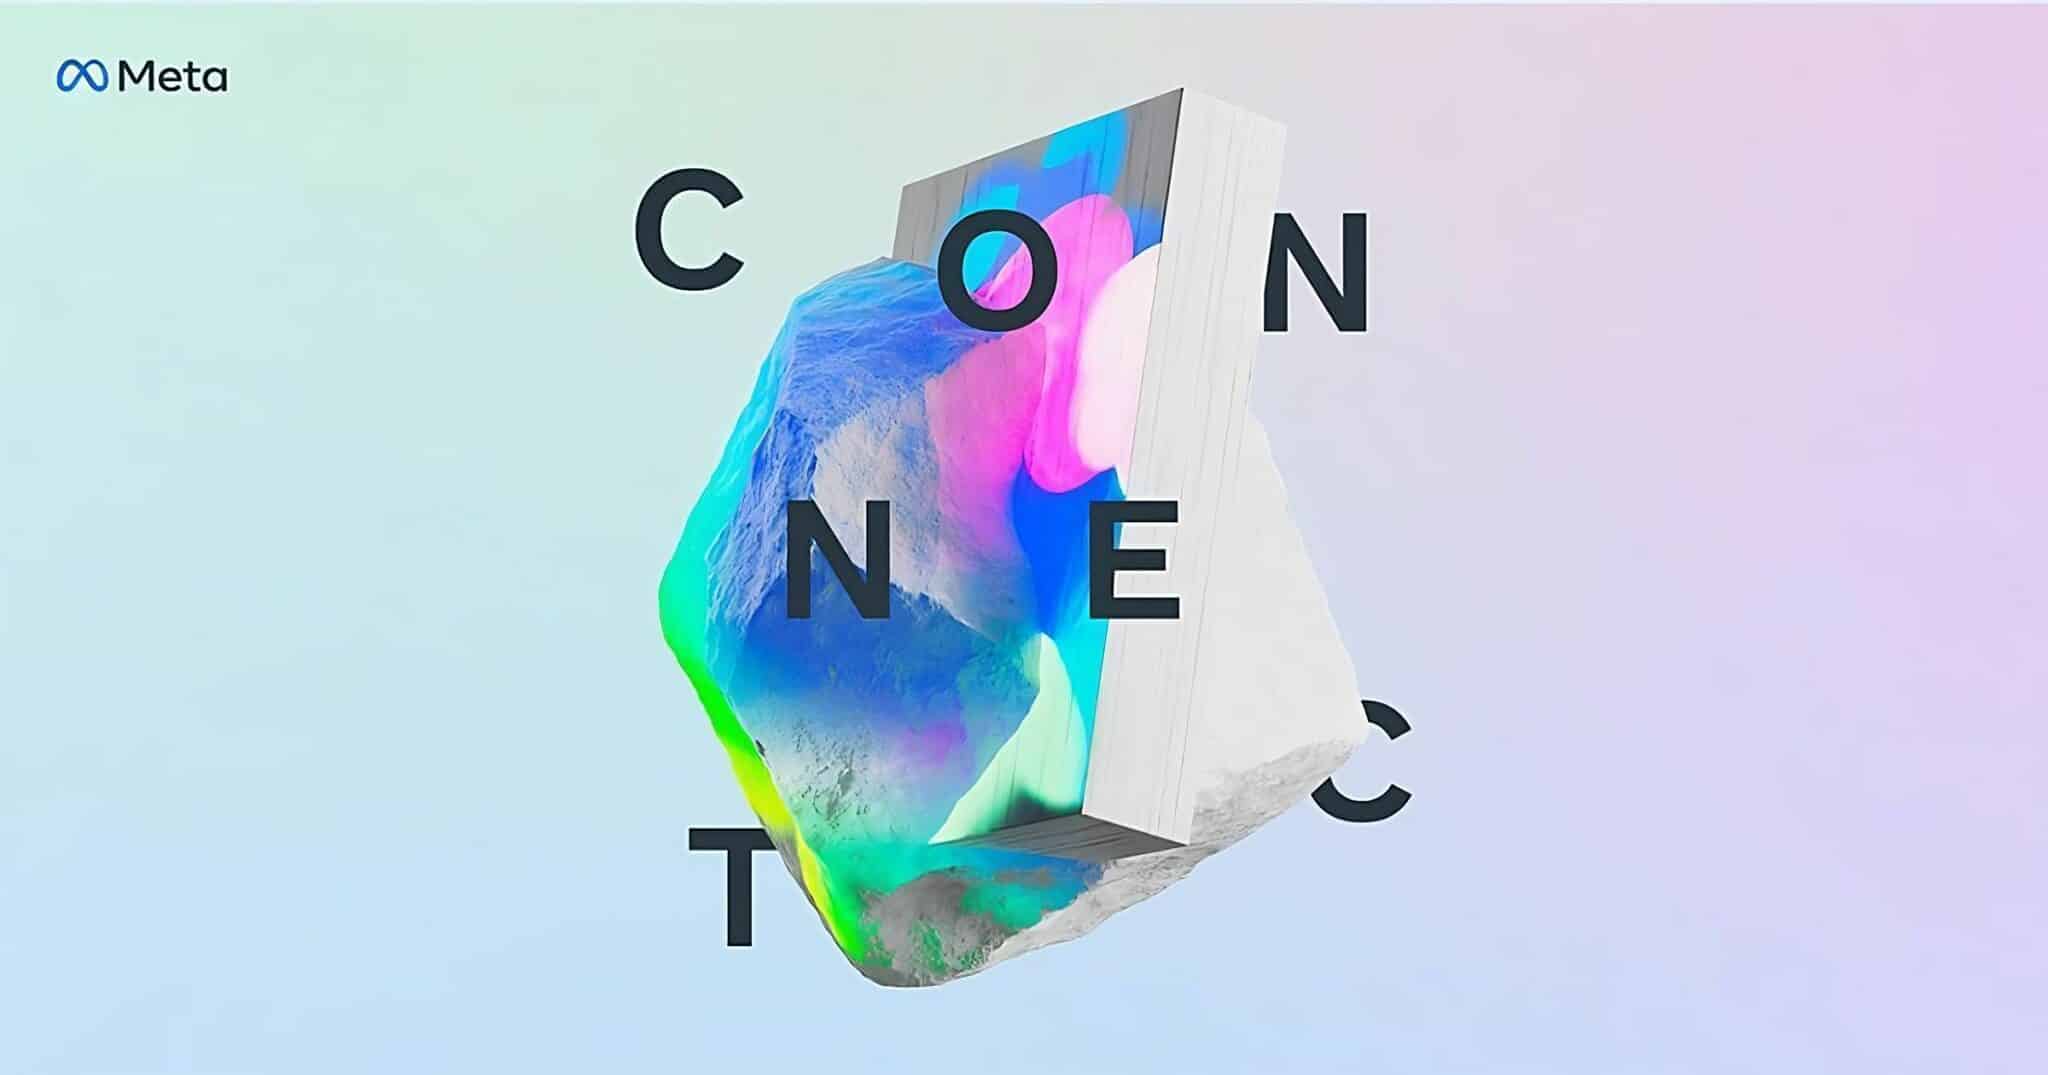 Meta Connect大会将于10月11日召开，将发布新款VR头显及更多元宇宙内容